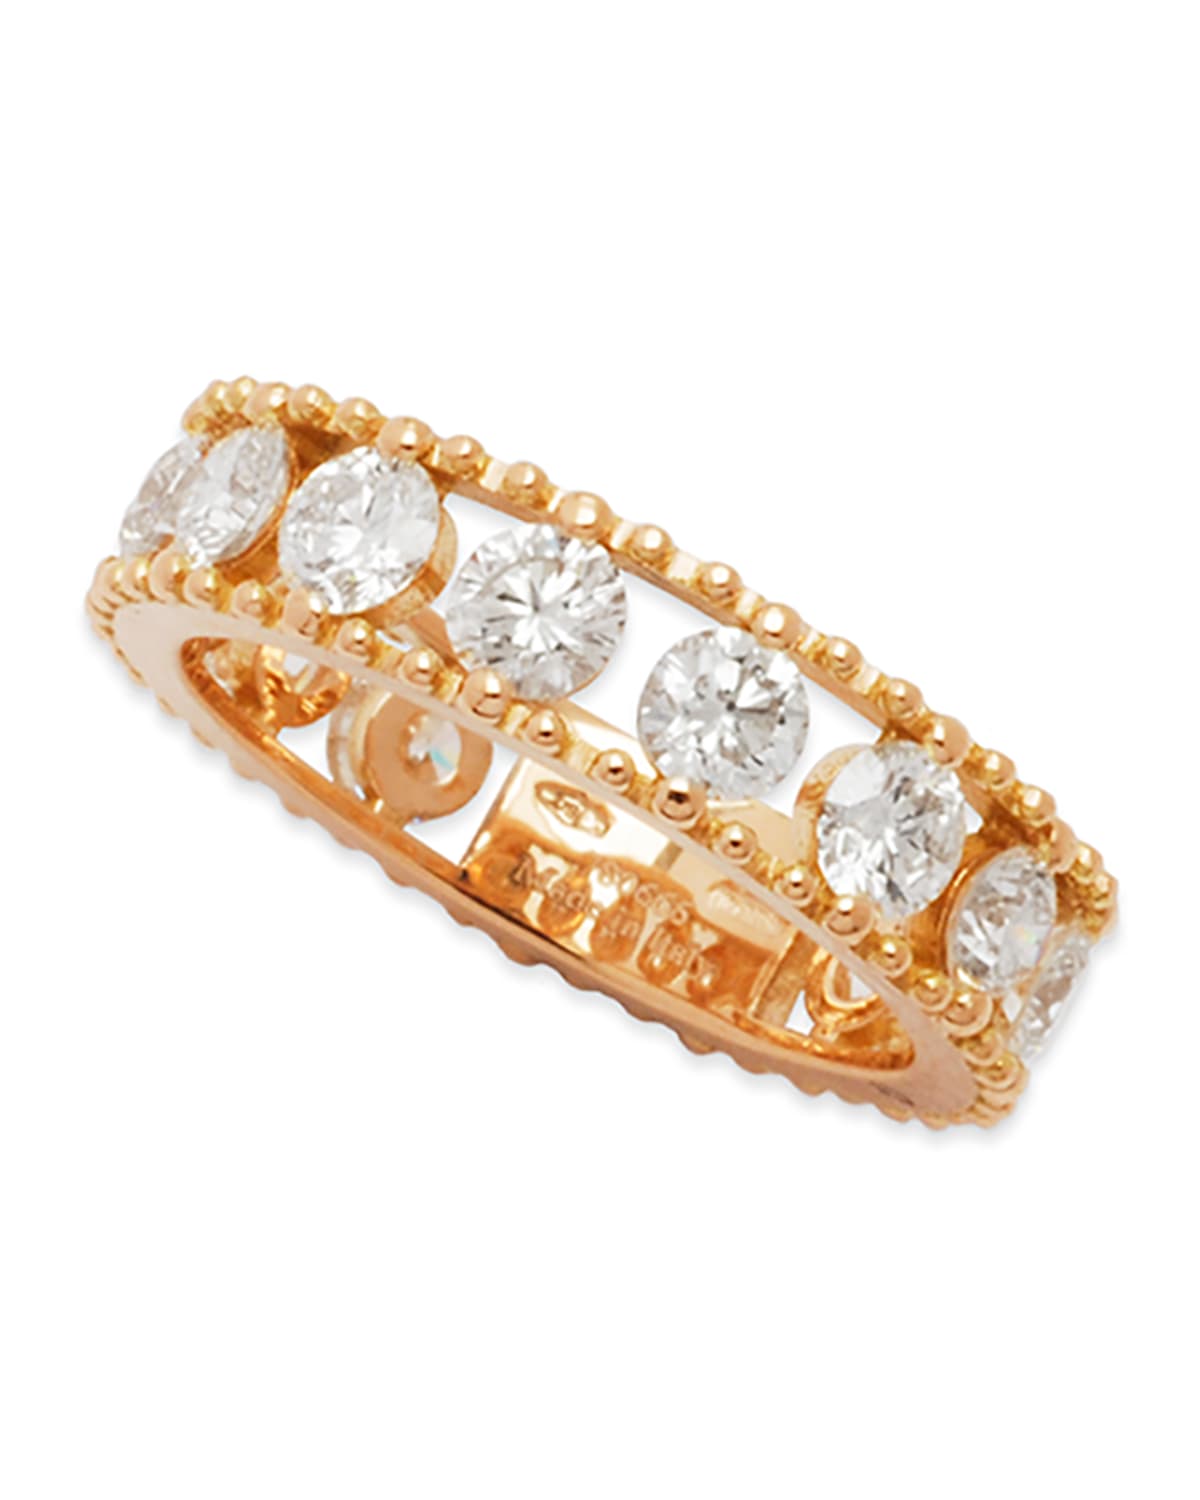 Allegra 18k Rose Gold Diamond Openwork Band Ring (2.45ct),Size 7